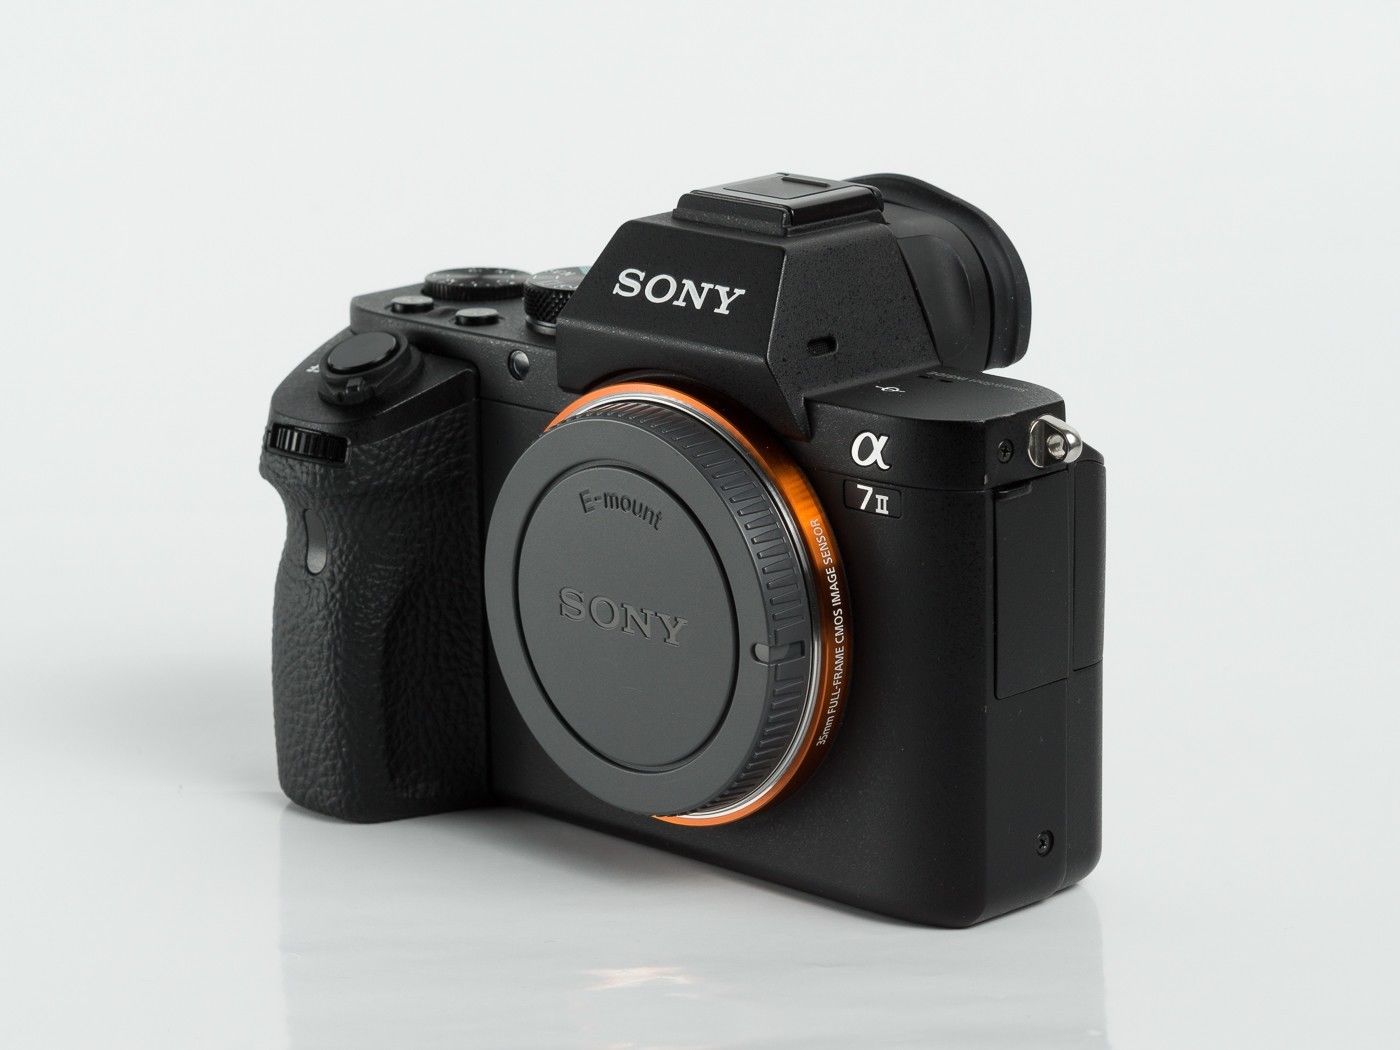 Sony Alpha ILCE-7M2 Alpha 7ii A7ii 24.3 MP Digitalkamera - Schwarz (Body)